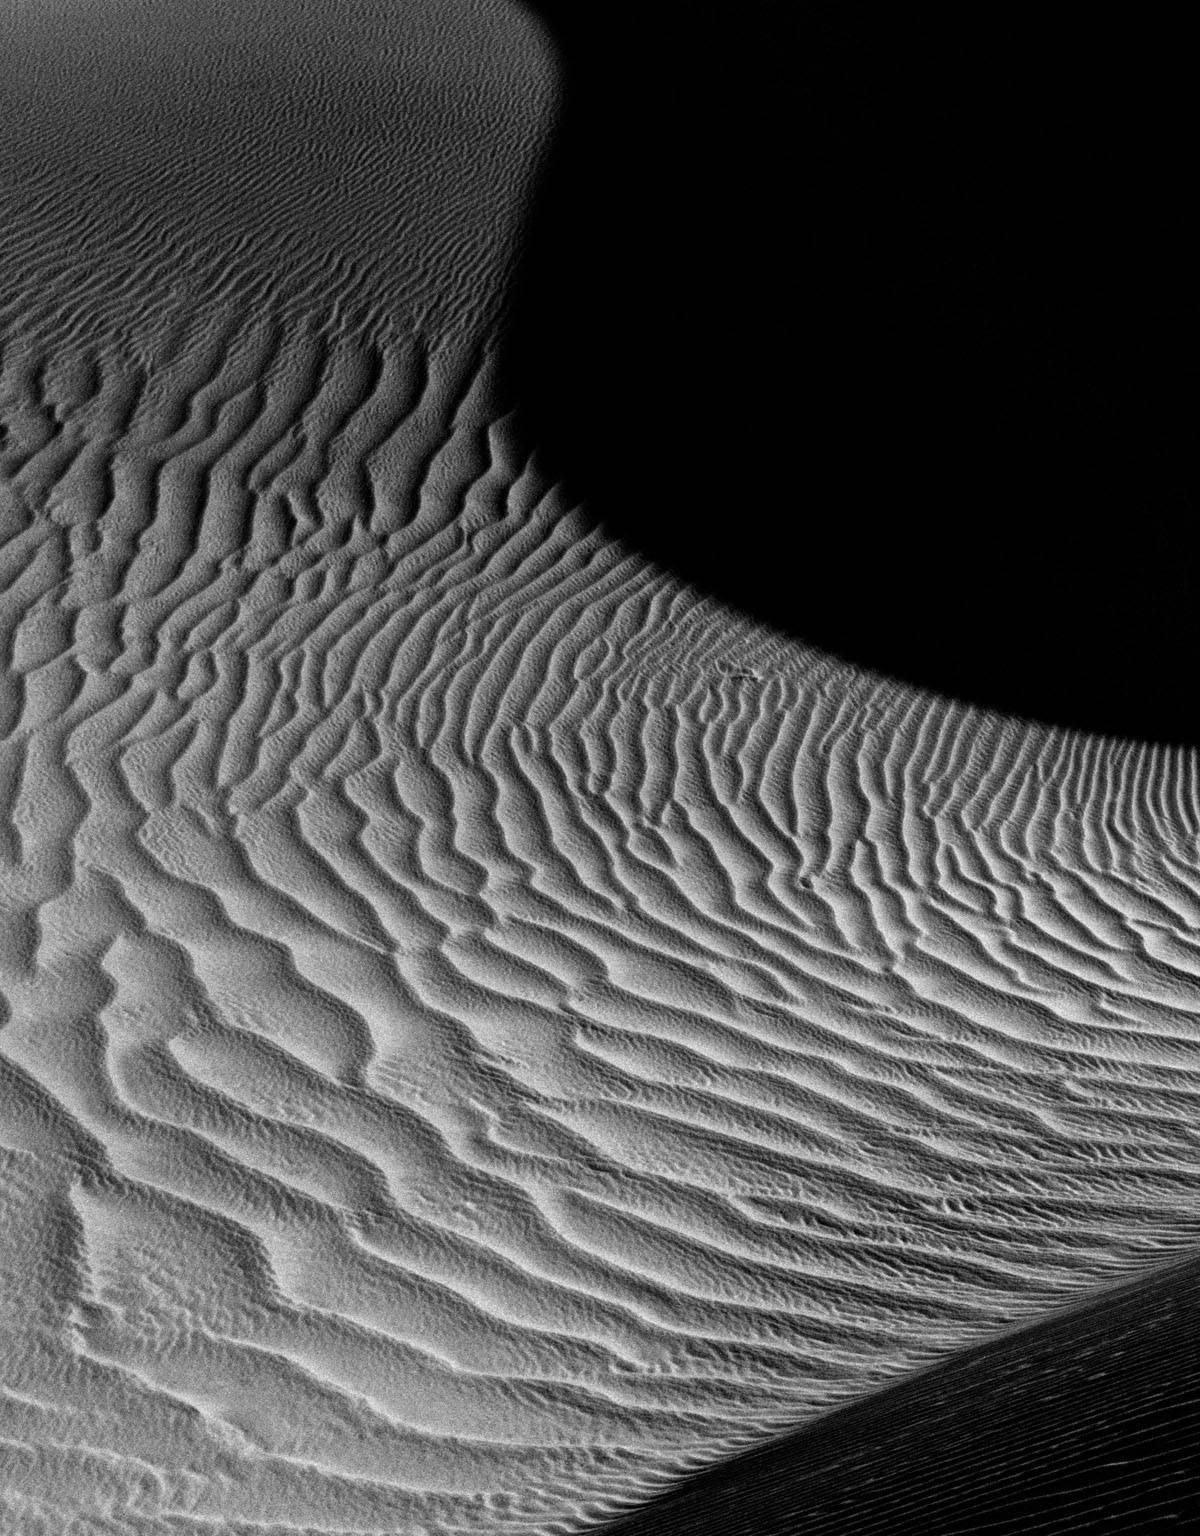 Sand Dunes Series #1 - Gray Landscape Photograph by Keiji Iwai